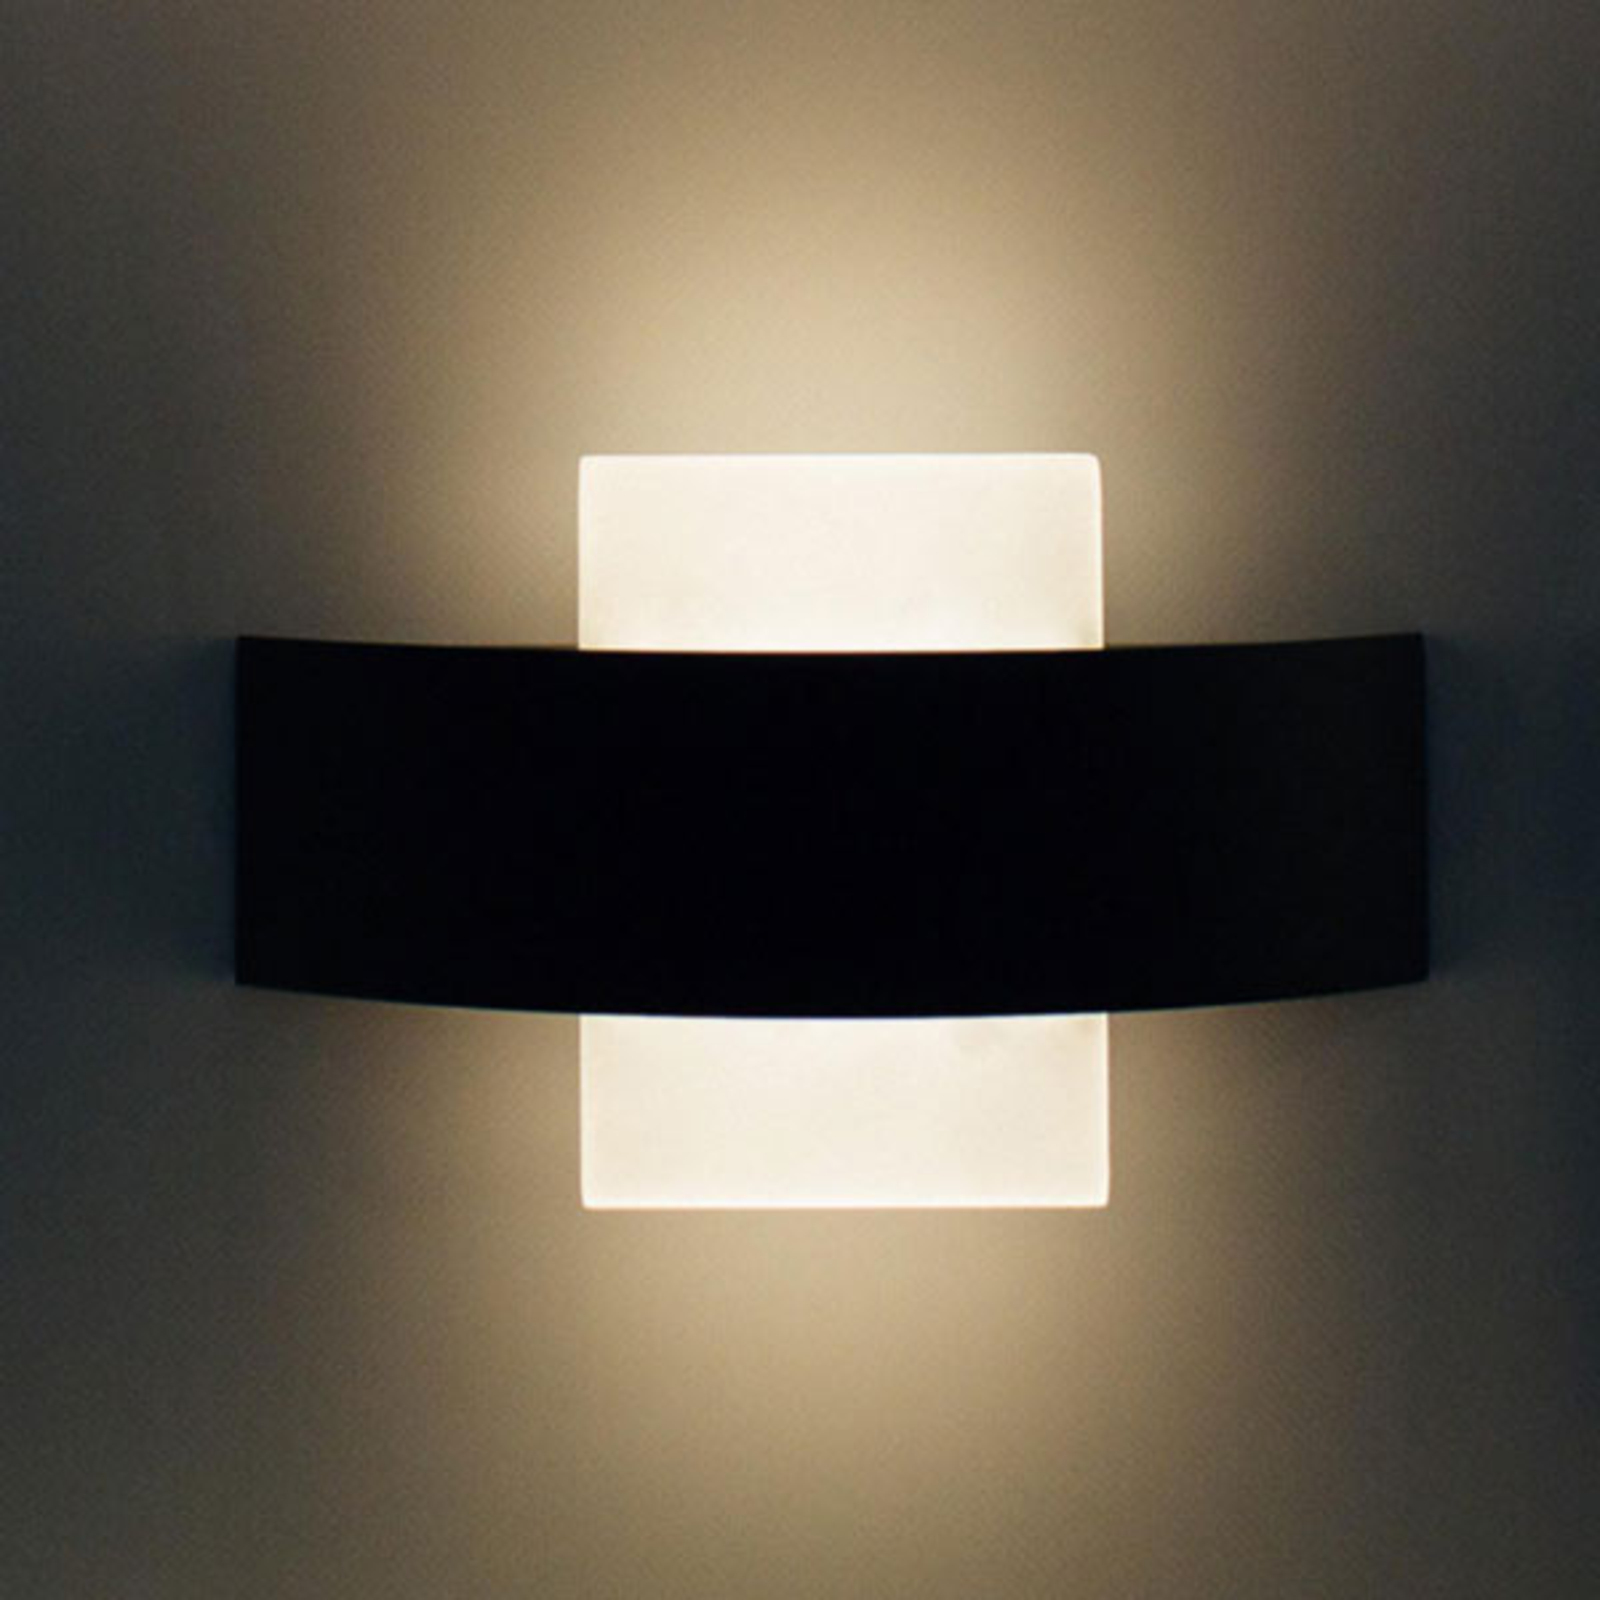 LEDVANCE Endura Style Shield Square utomhuslampa